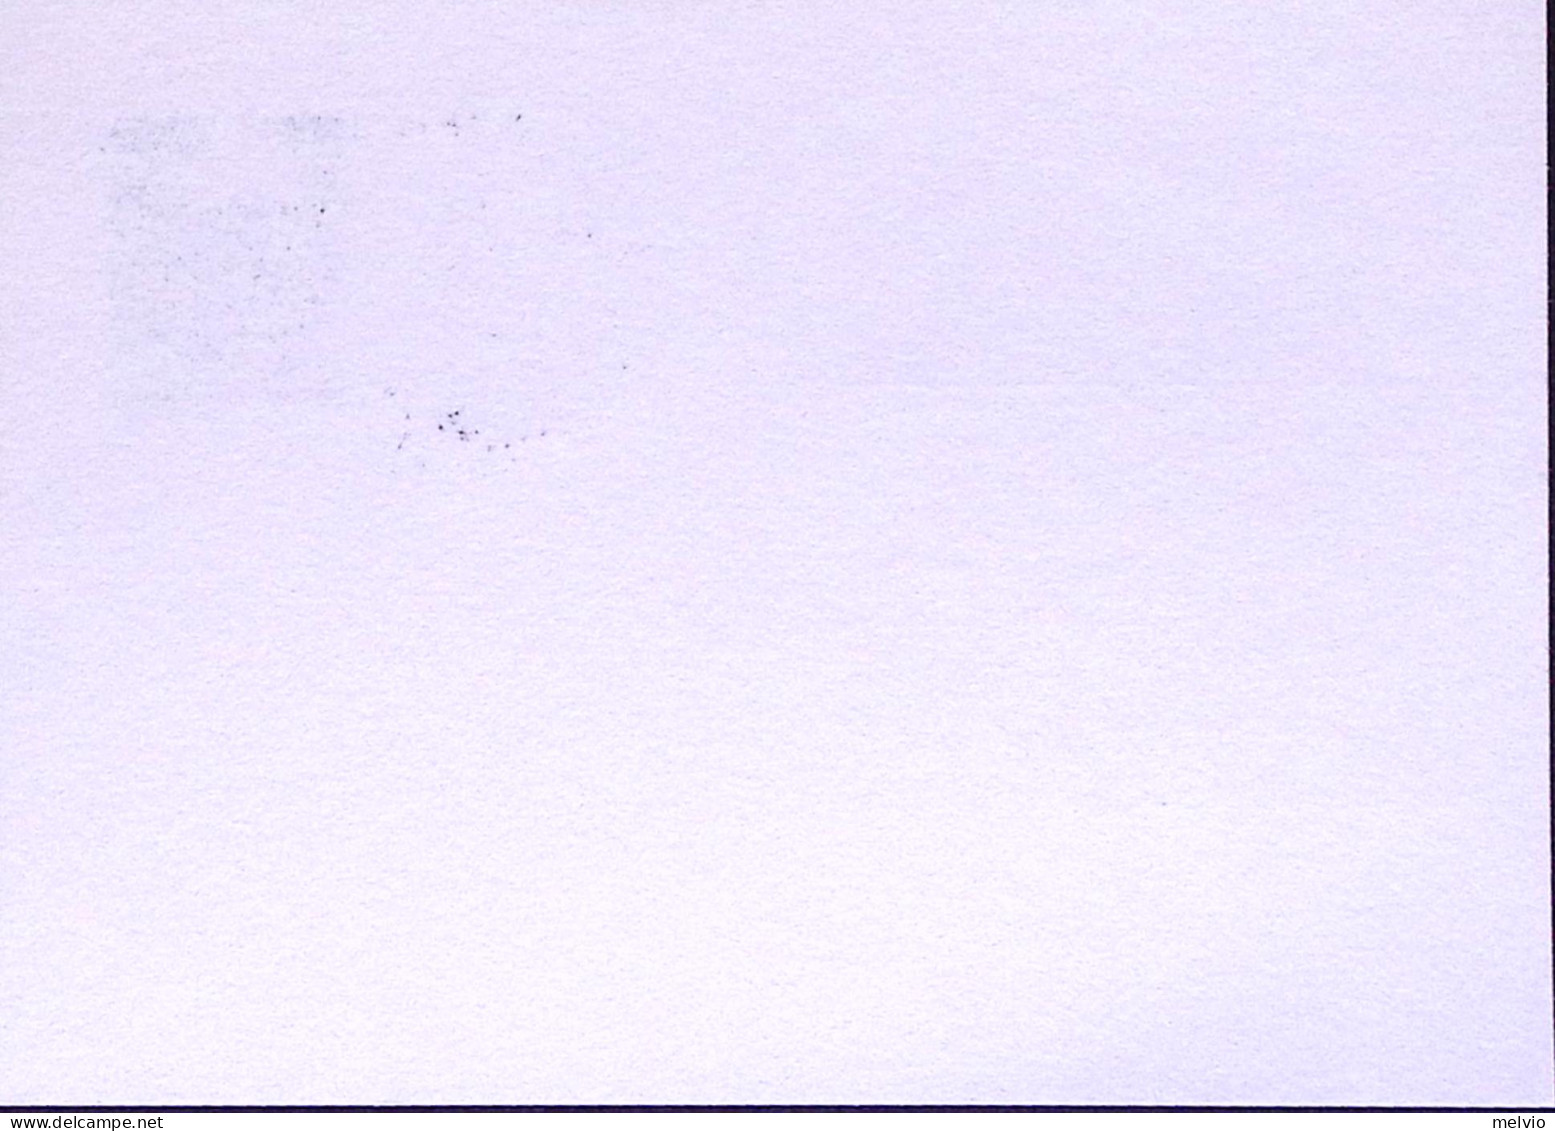 1993-SAN MINIATO (Pi) Cartolina Postale Castelli Lire 700, Soprastampato I.P.Z.S - Stamped Stationery